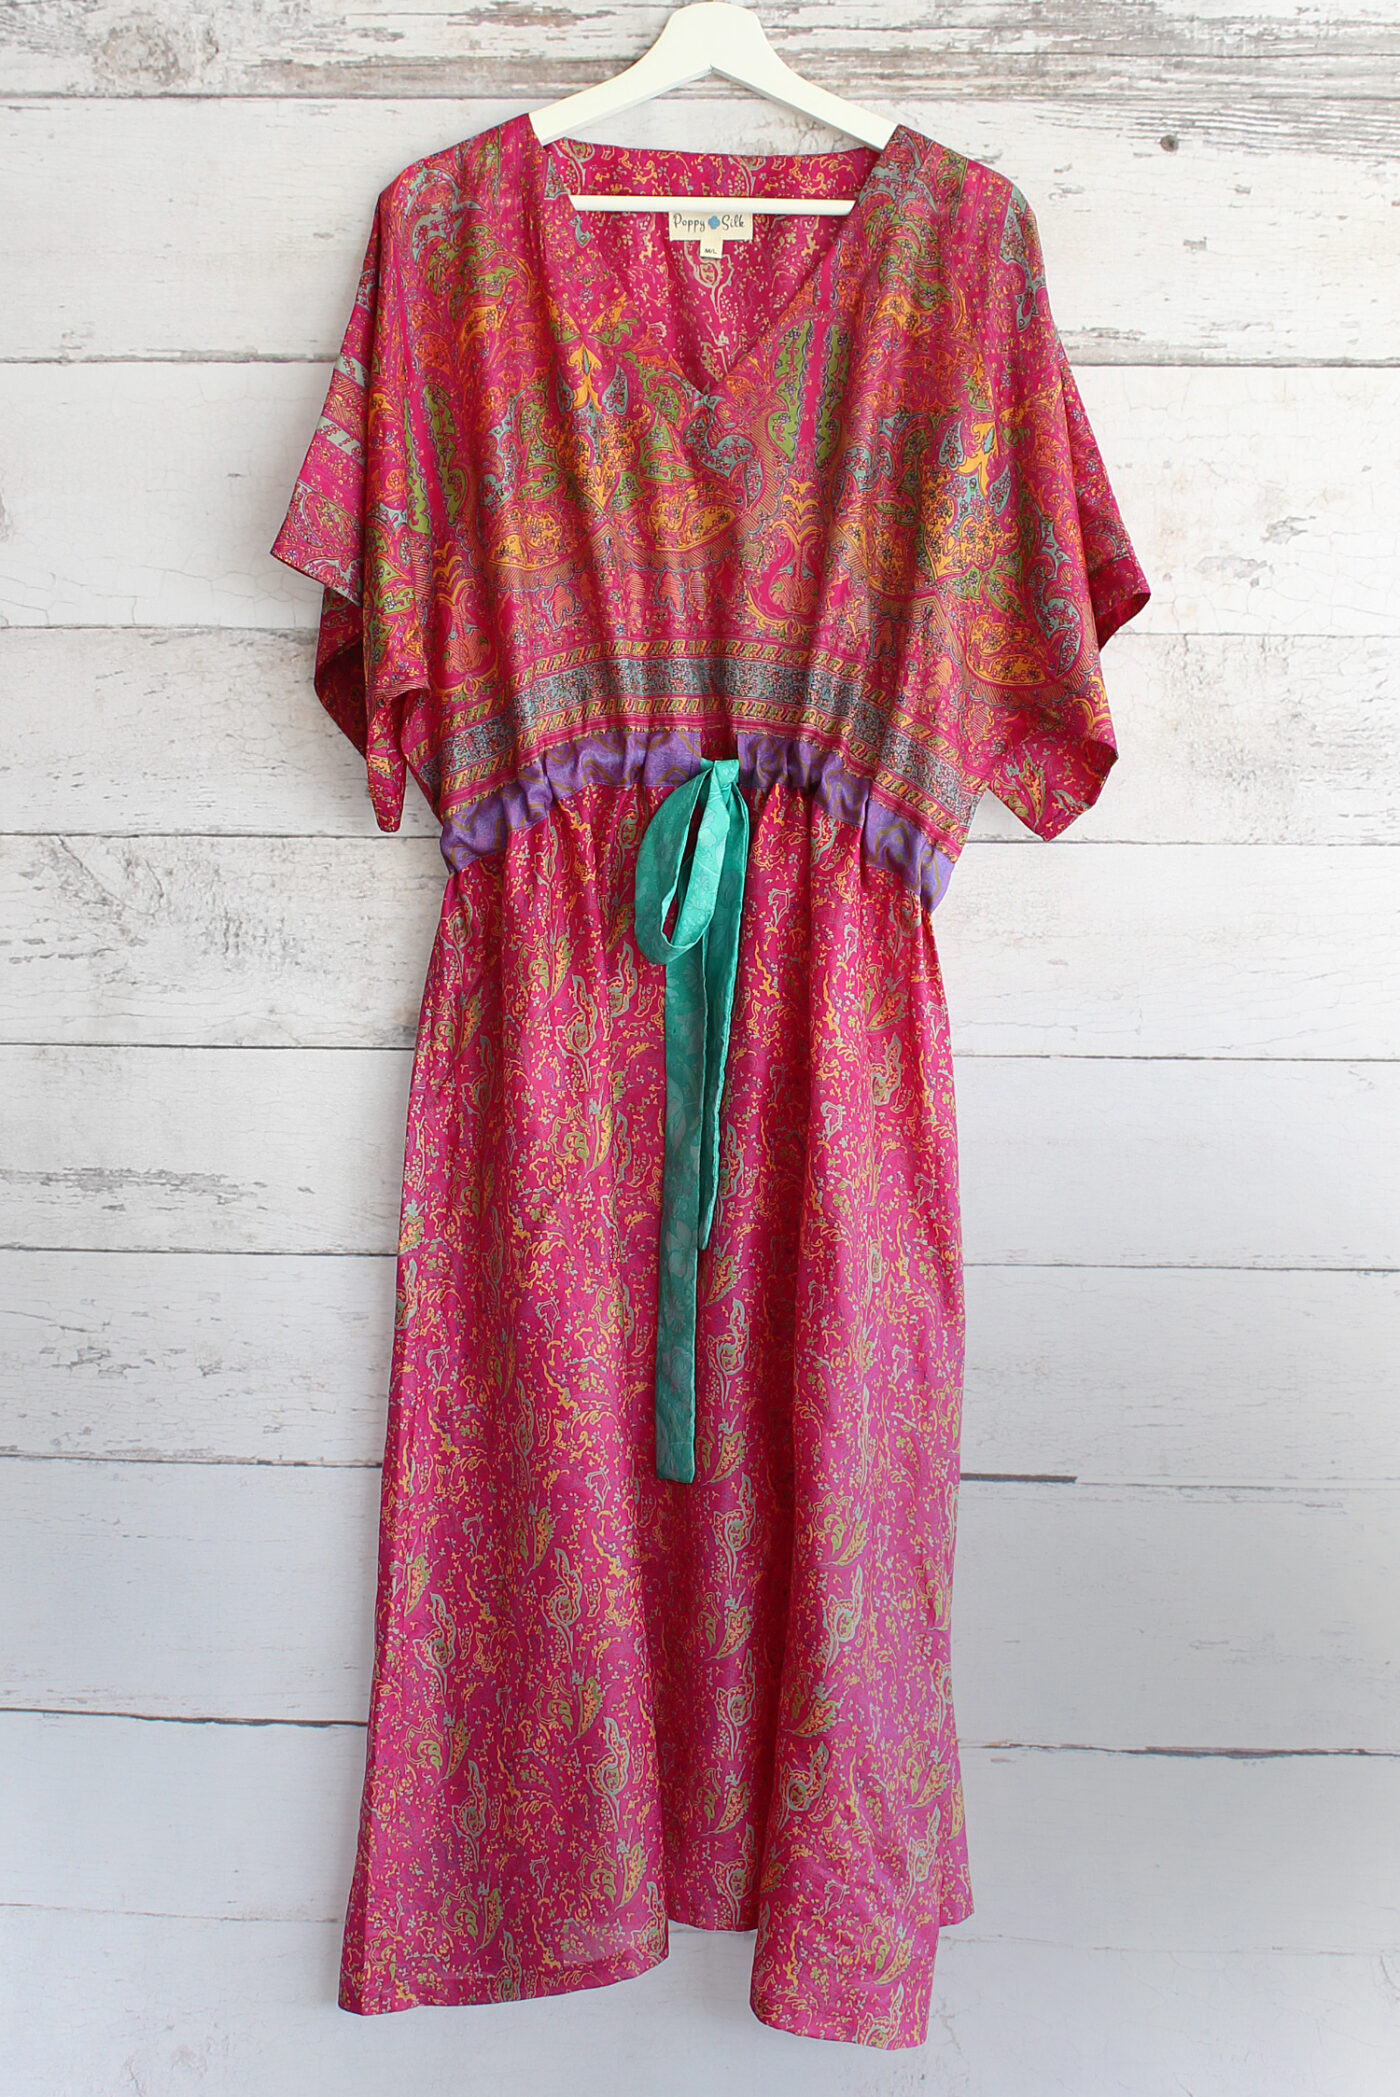 Jacinda Recycled Silk Sari Print Dress J35